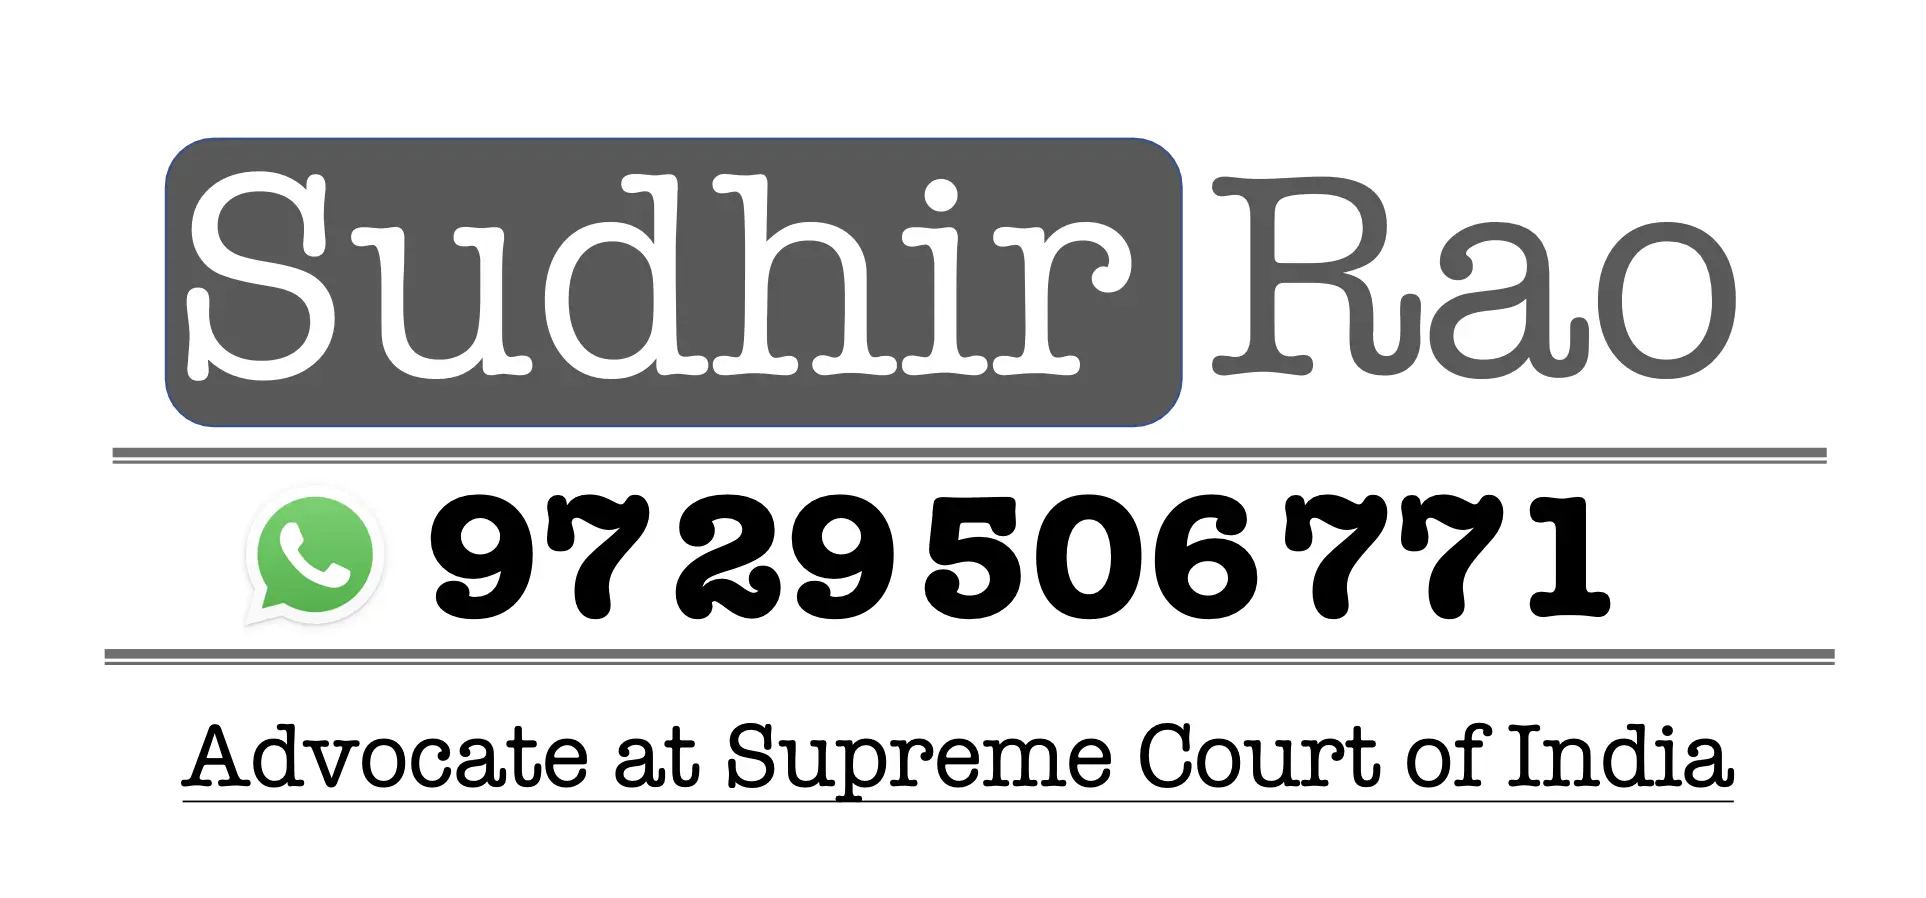 Supreme Court Advocate Mobile Number